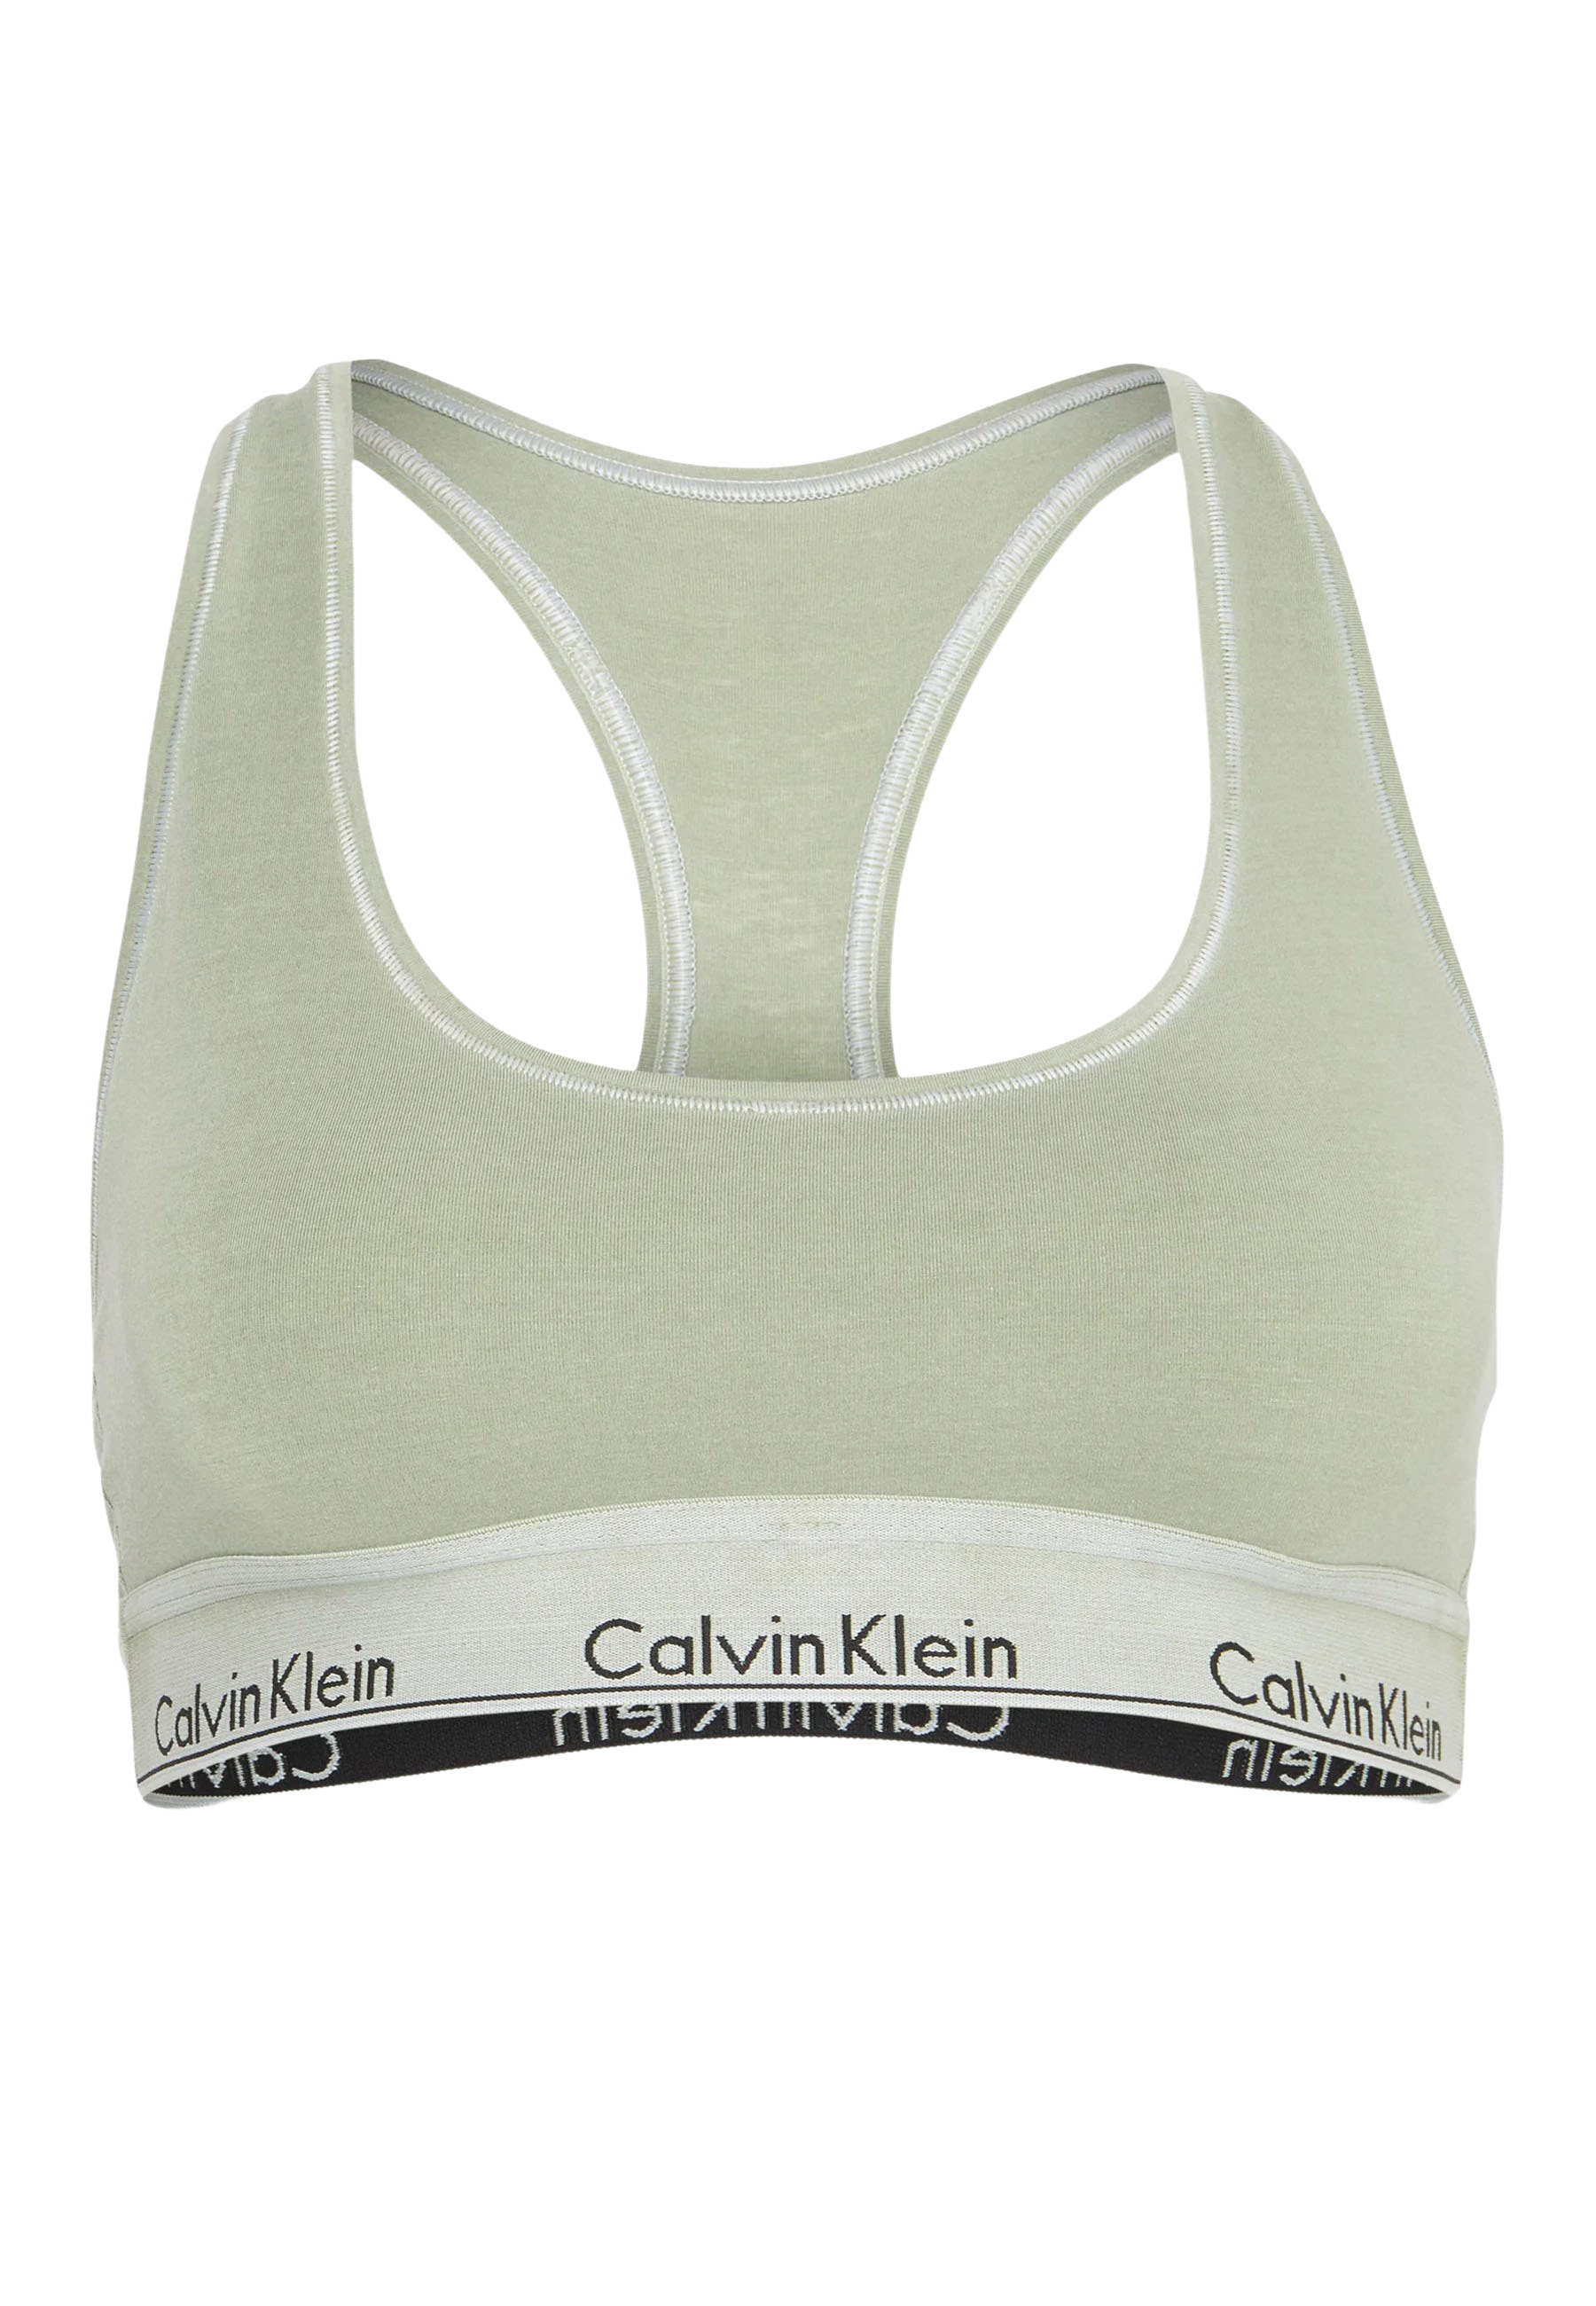 Calvin Klein sport bhs groen Dames maat S